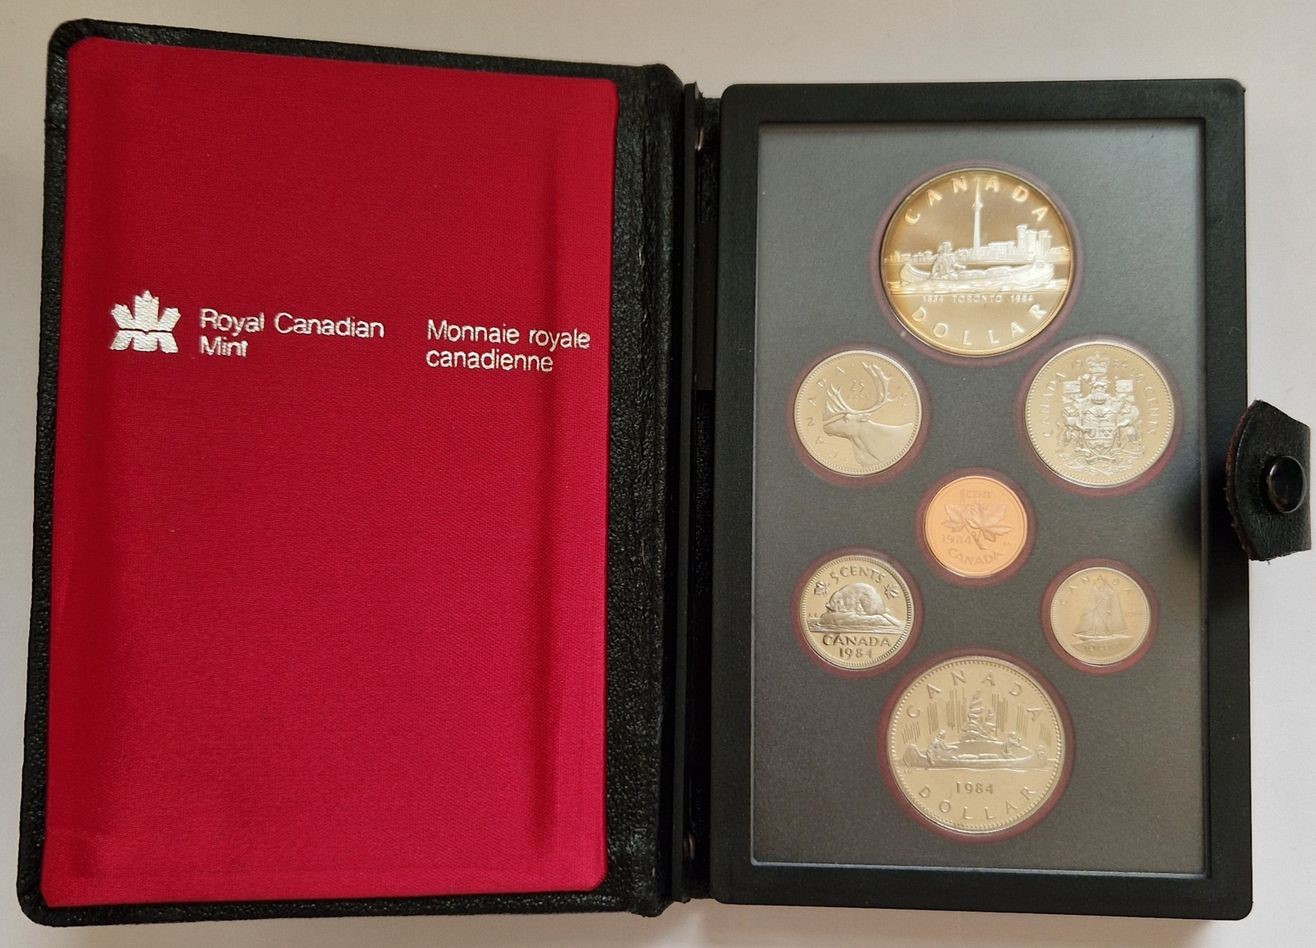  Kanada KMS 1984 1 Cent -1 Dollar Royal Canadian Mint Münzenankauf Koblenz Frank Maurer AD133   